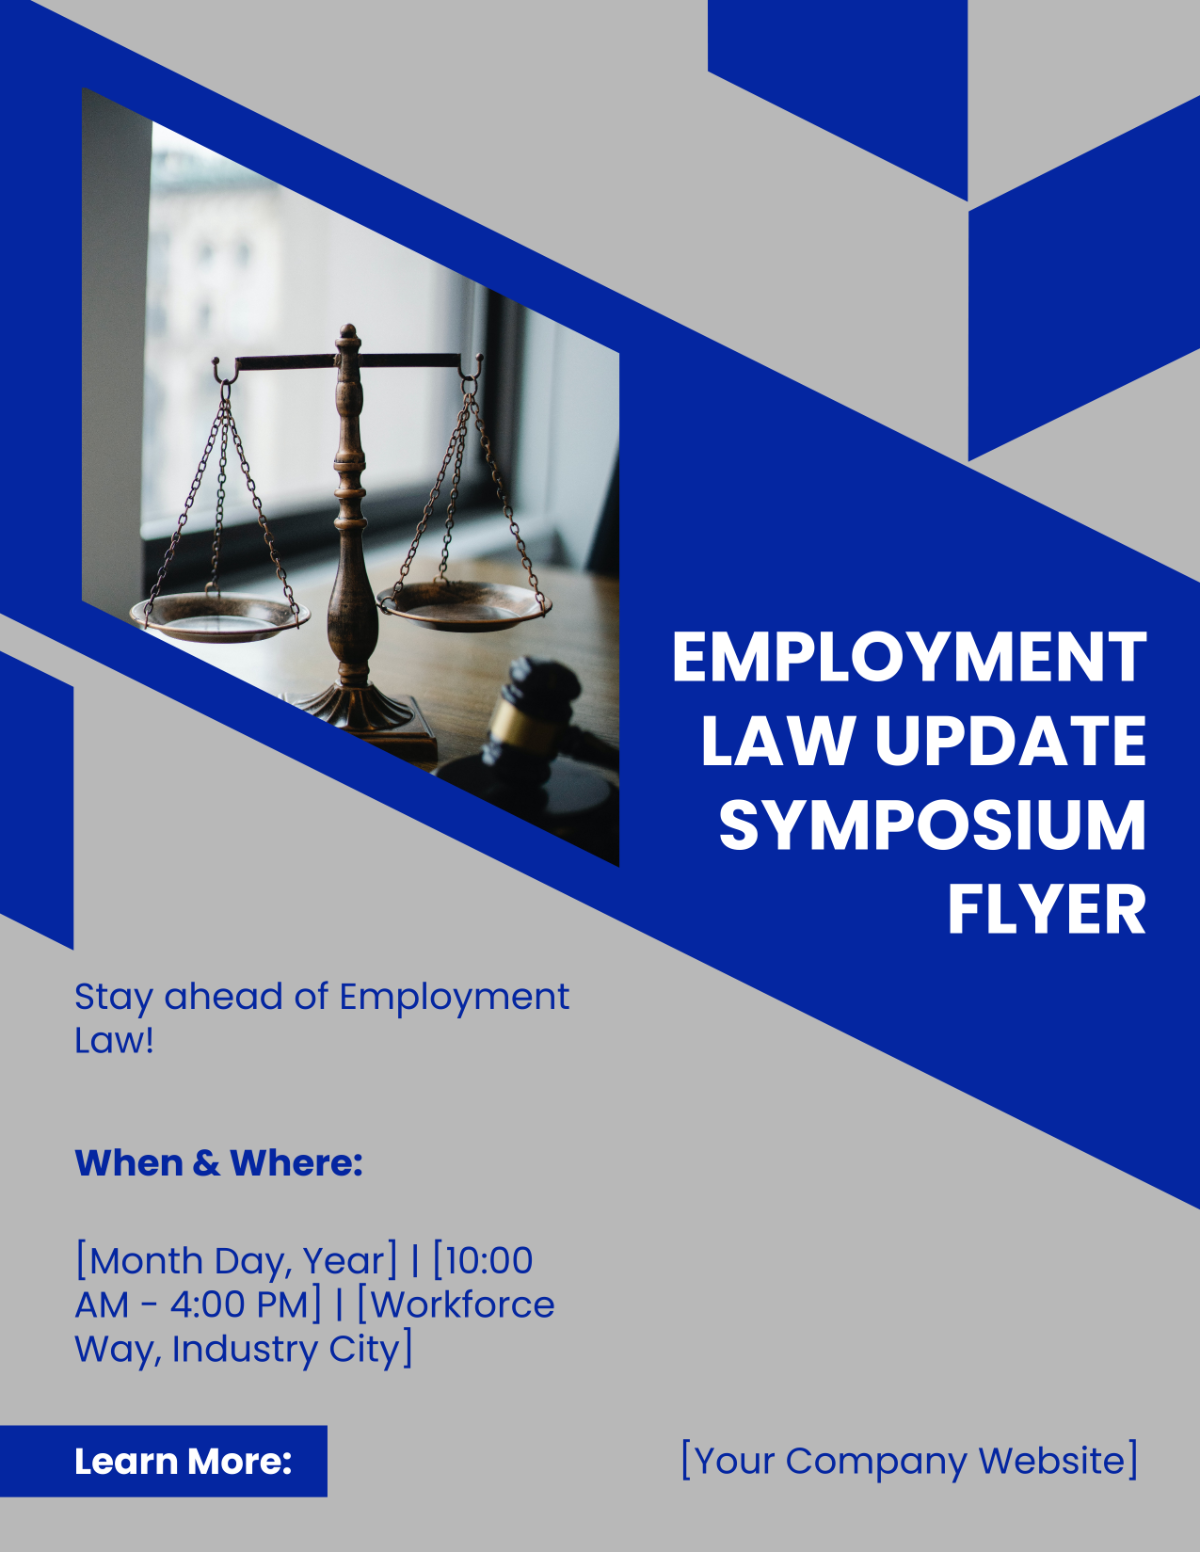 Employment Law Update Symposium Flyer Template